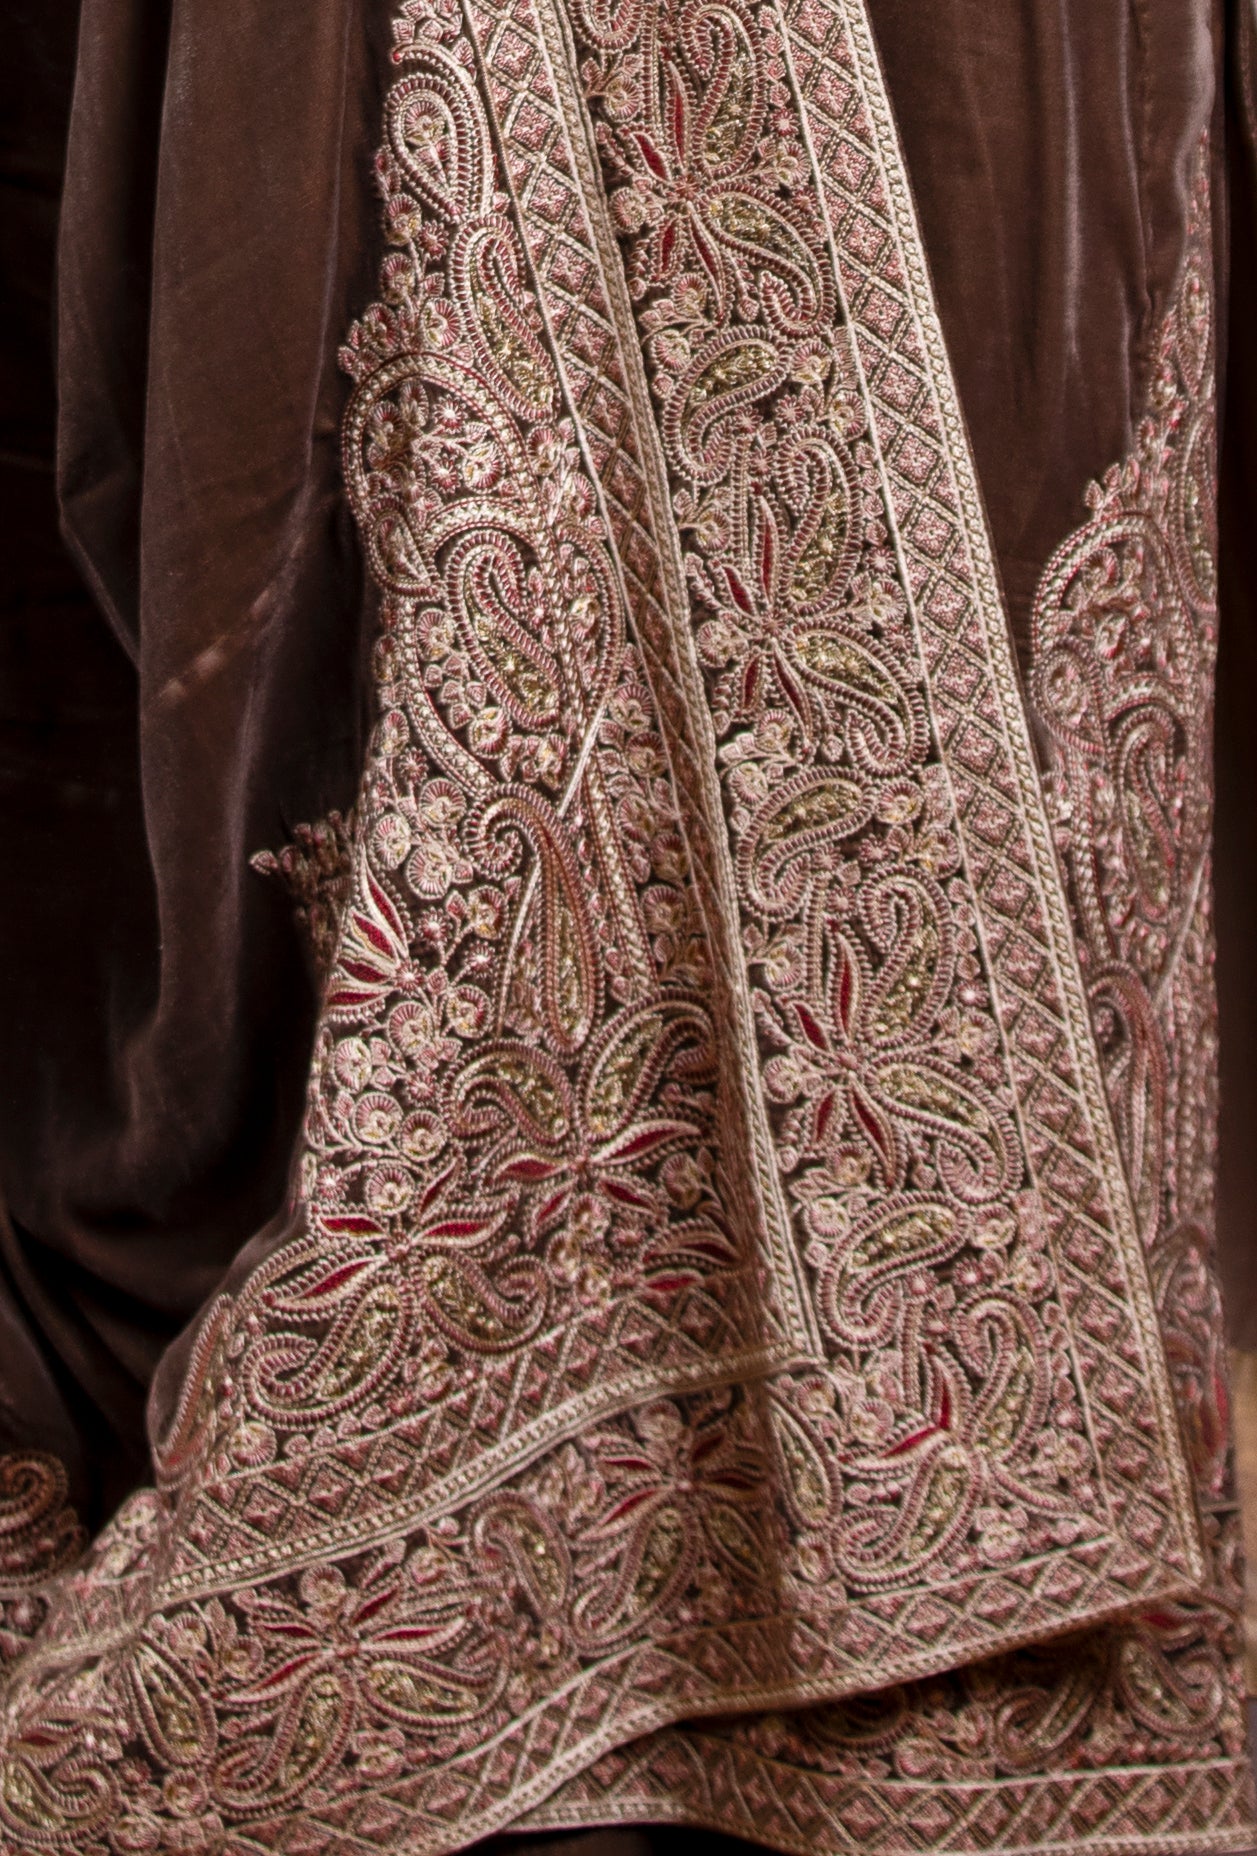 Threaded Embroidery on Velvet Shawl (Suit Optional)